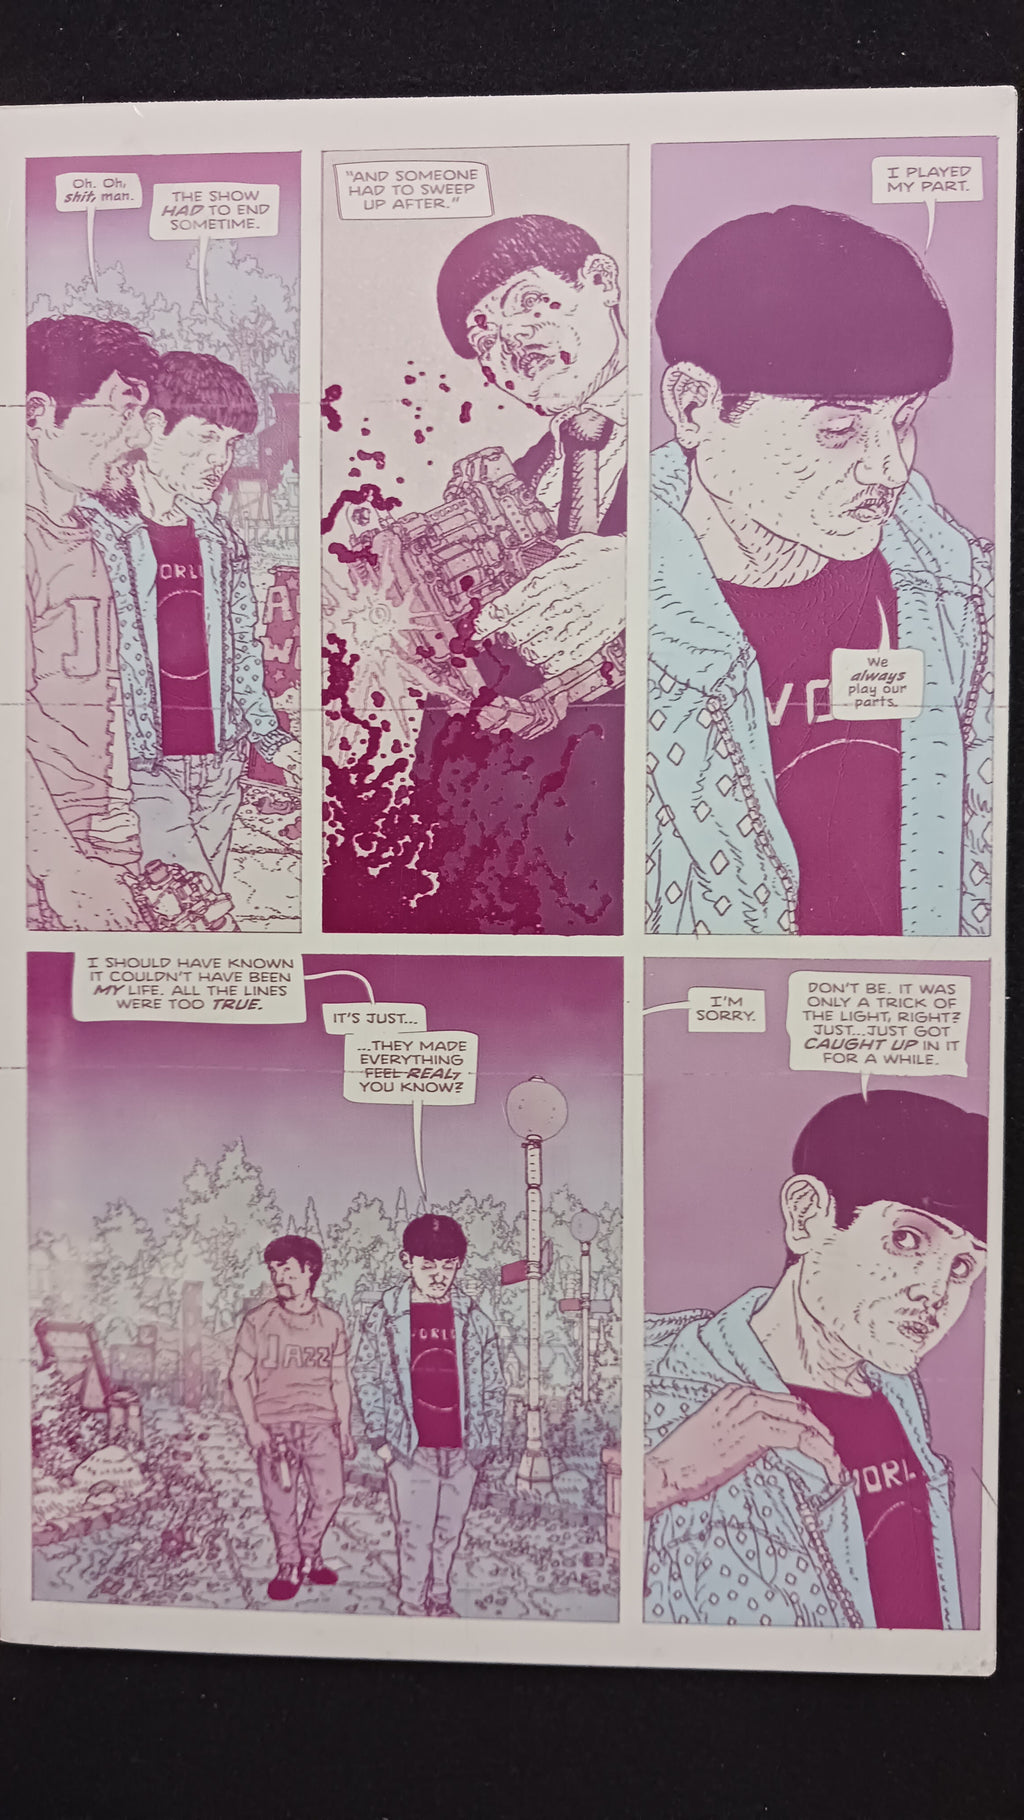 Agent of W.O.R.L.D.E #2 - Page 14 - PRESSWORKS - Comic Art -  Printer Plate - Magenta